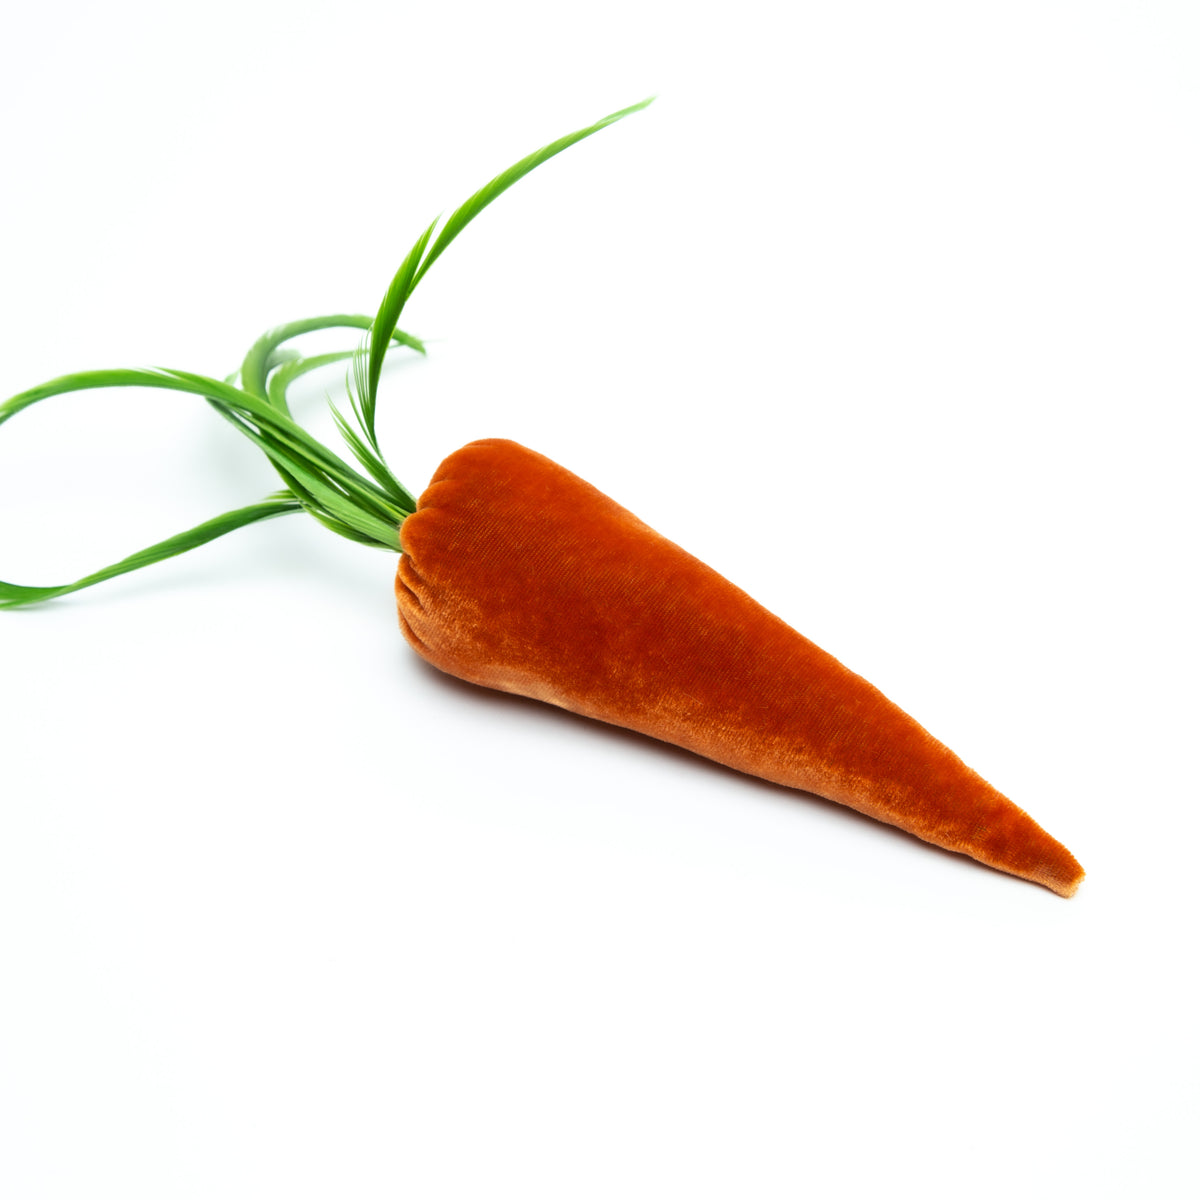 Carrot- Persimmon